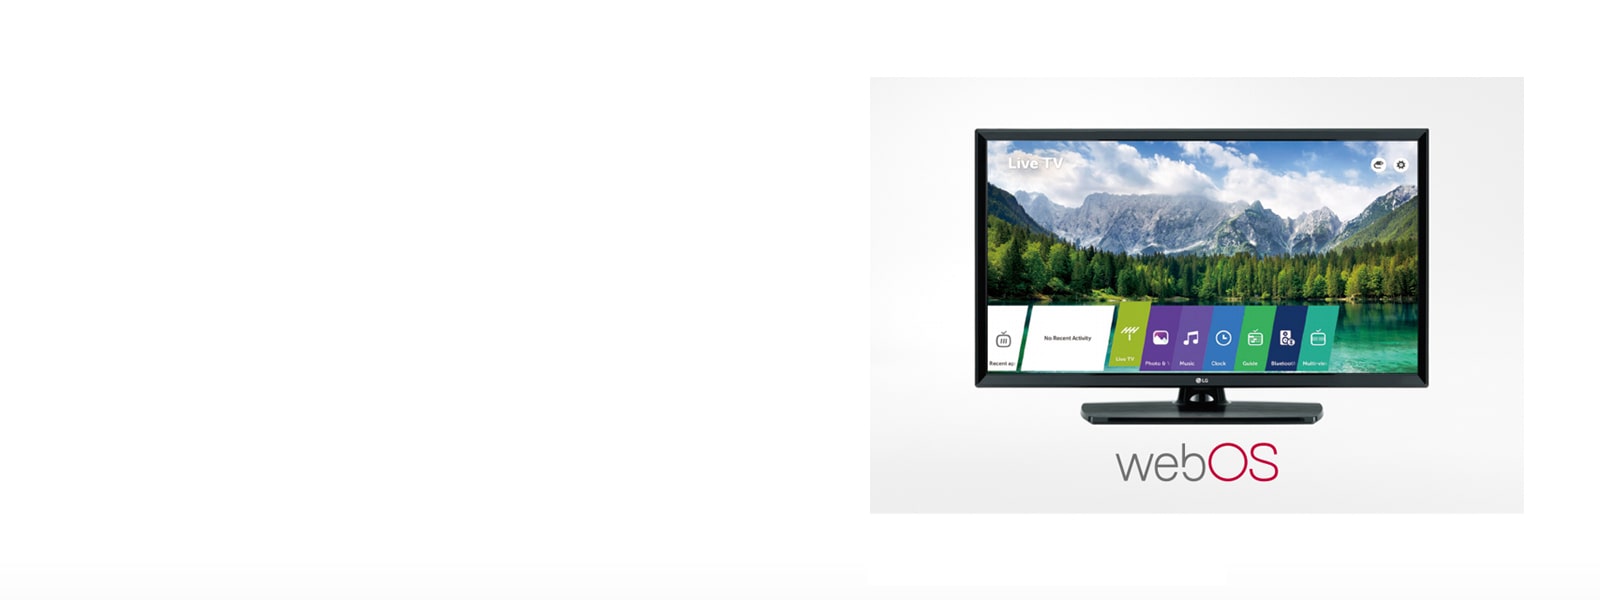 Smart TV от LG webOS 4.51